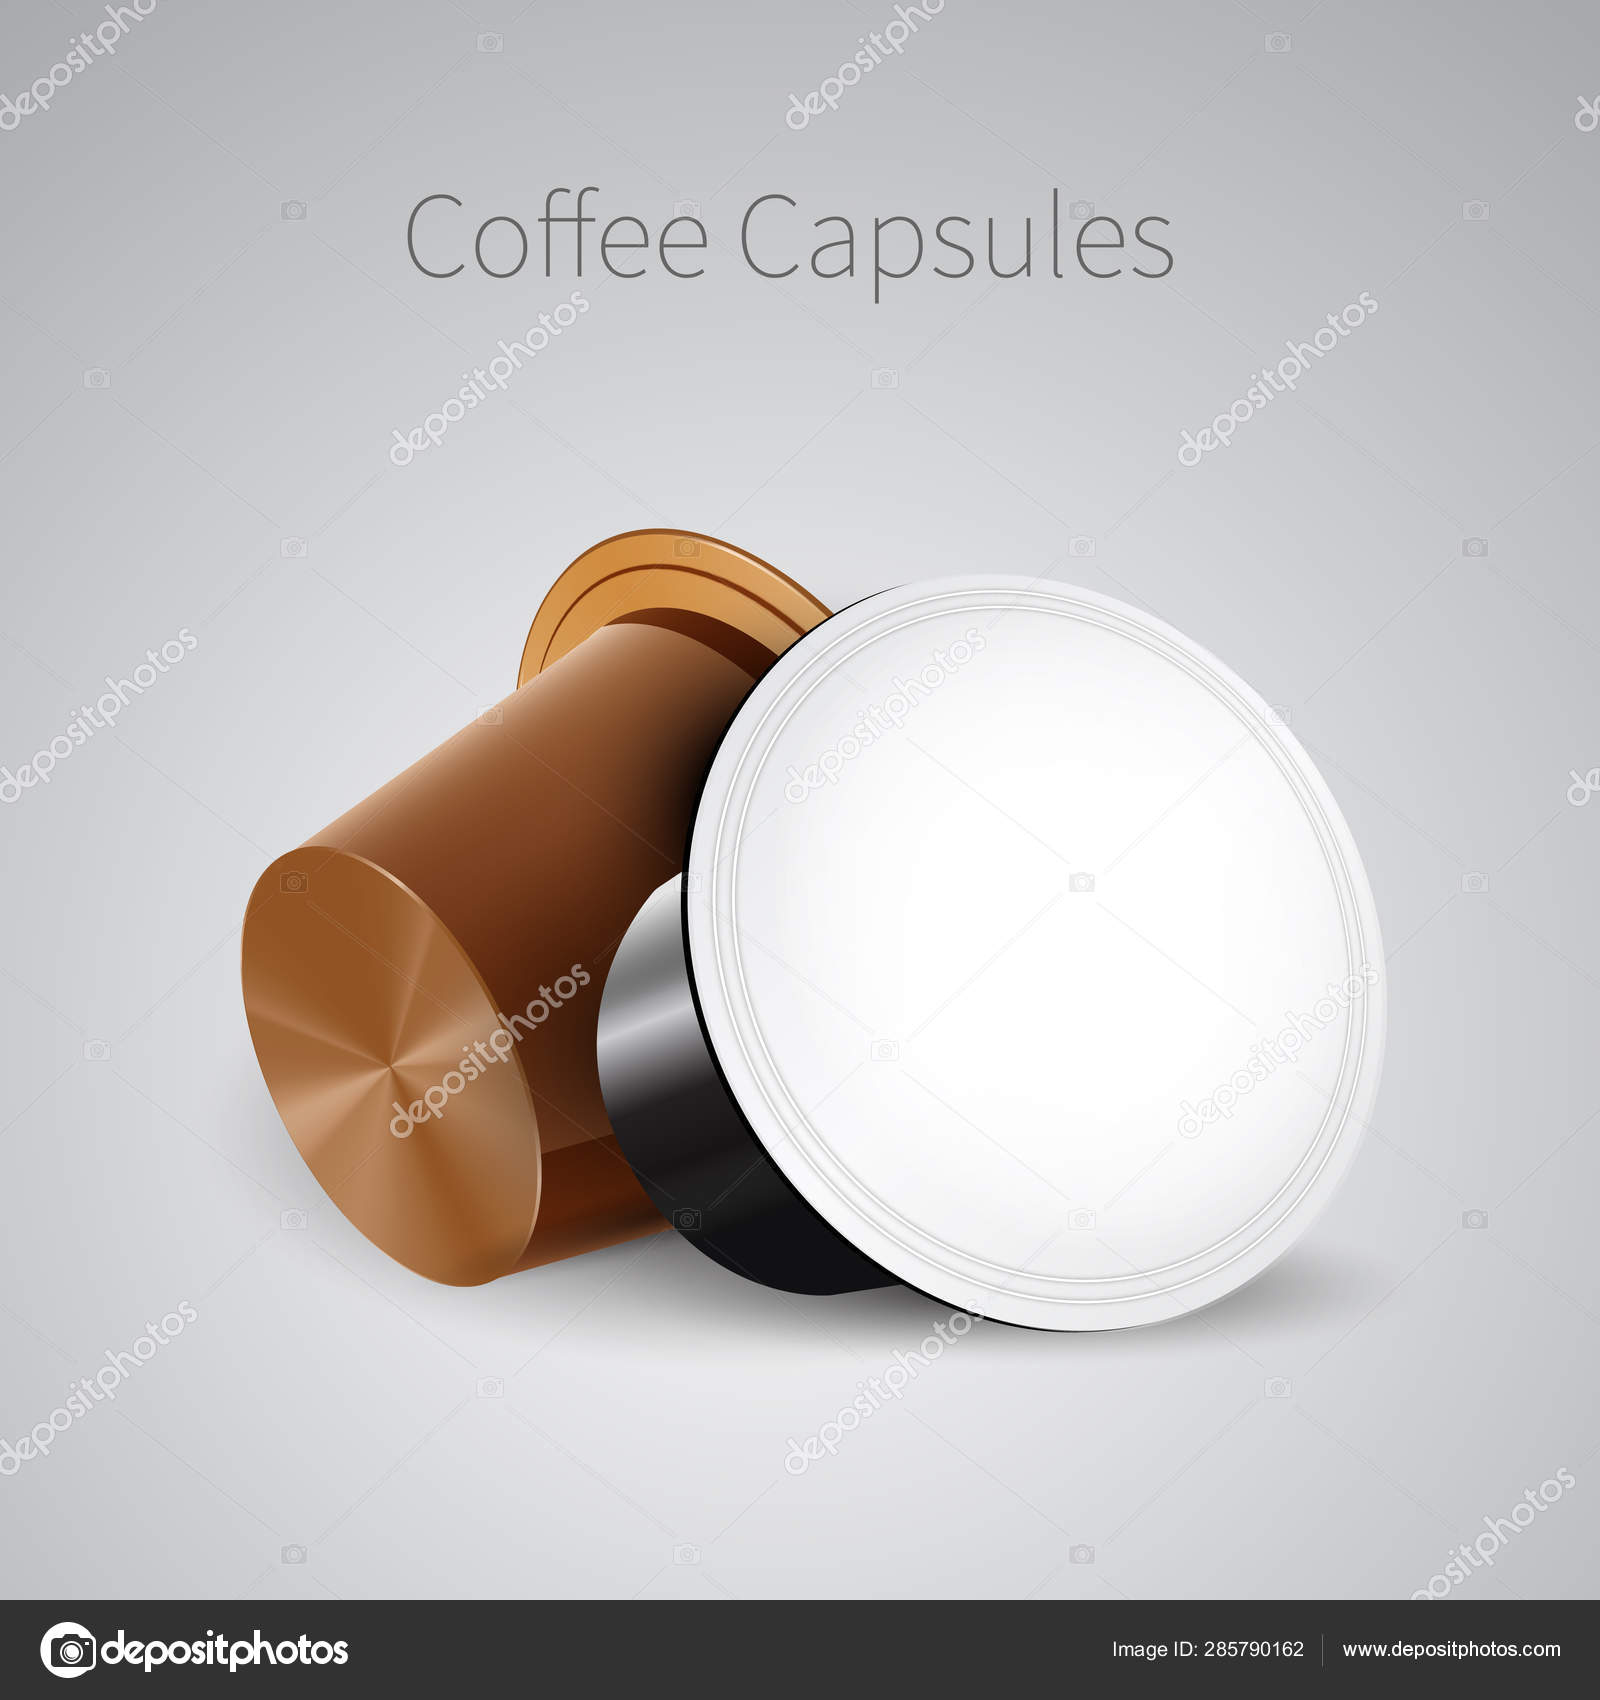 https://st4.depositphotos.com/11133046/28579/v/1600/depositphotos_285790162-stock-illustration-coffee-in-capsules-for-espresso.jpg